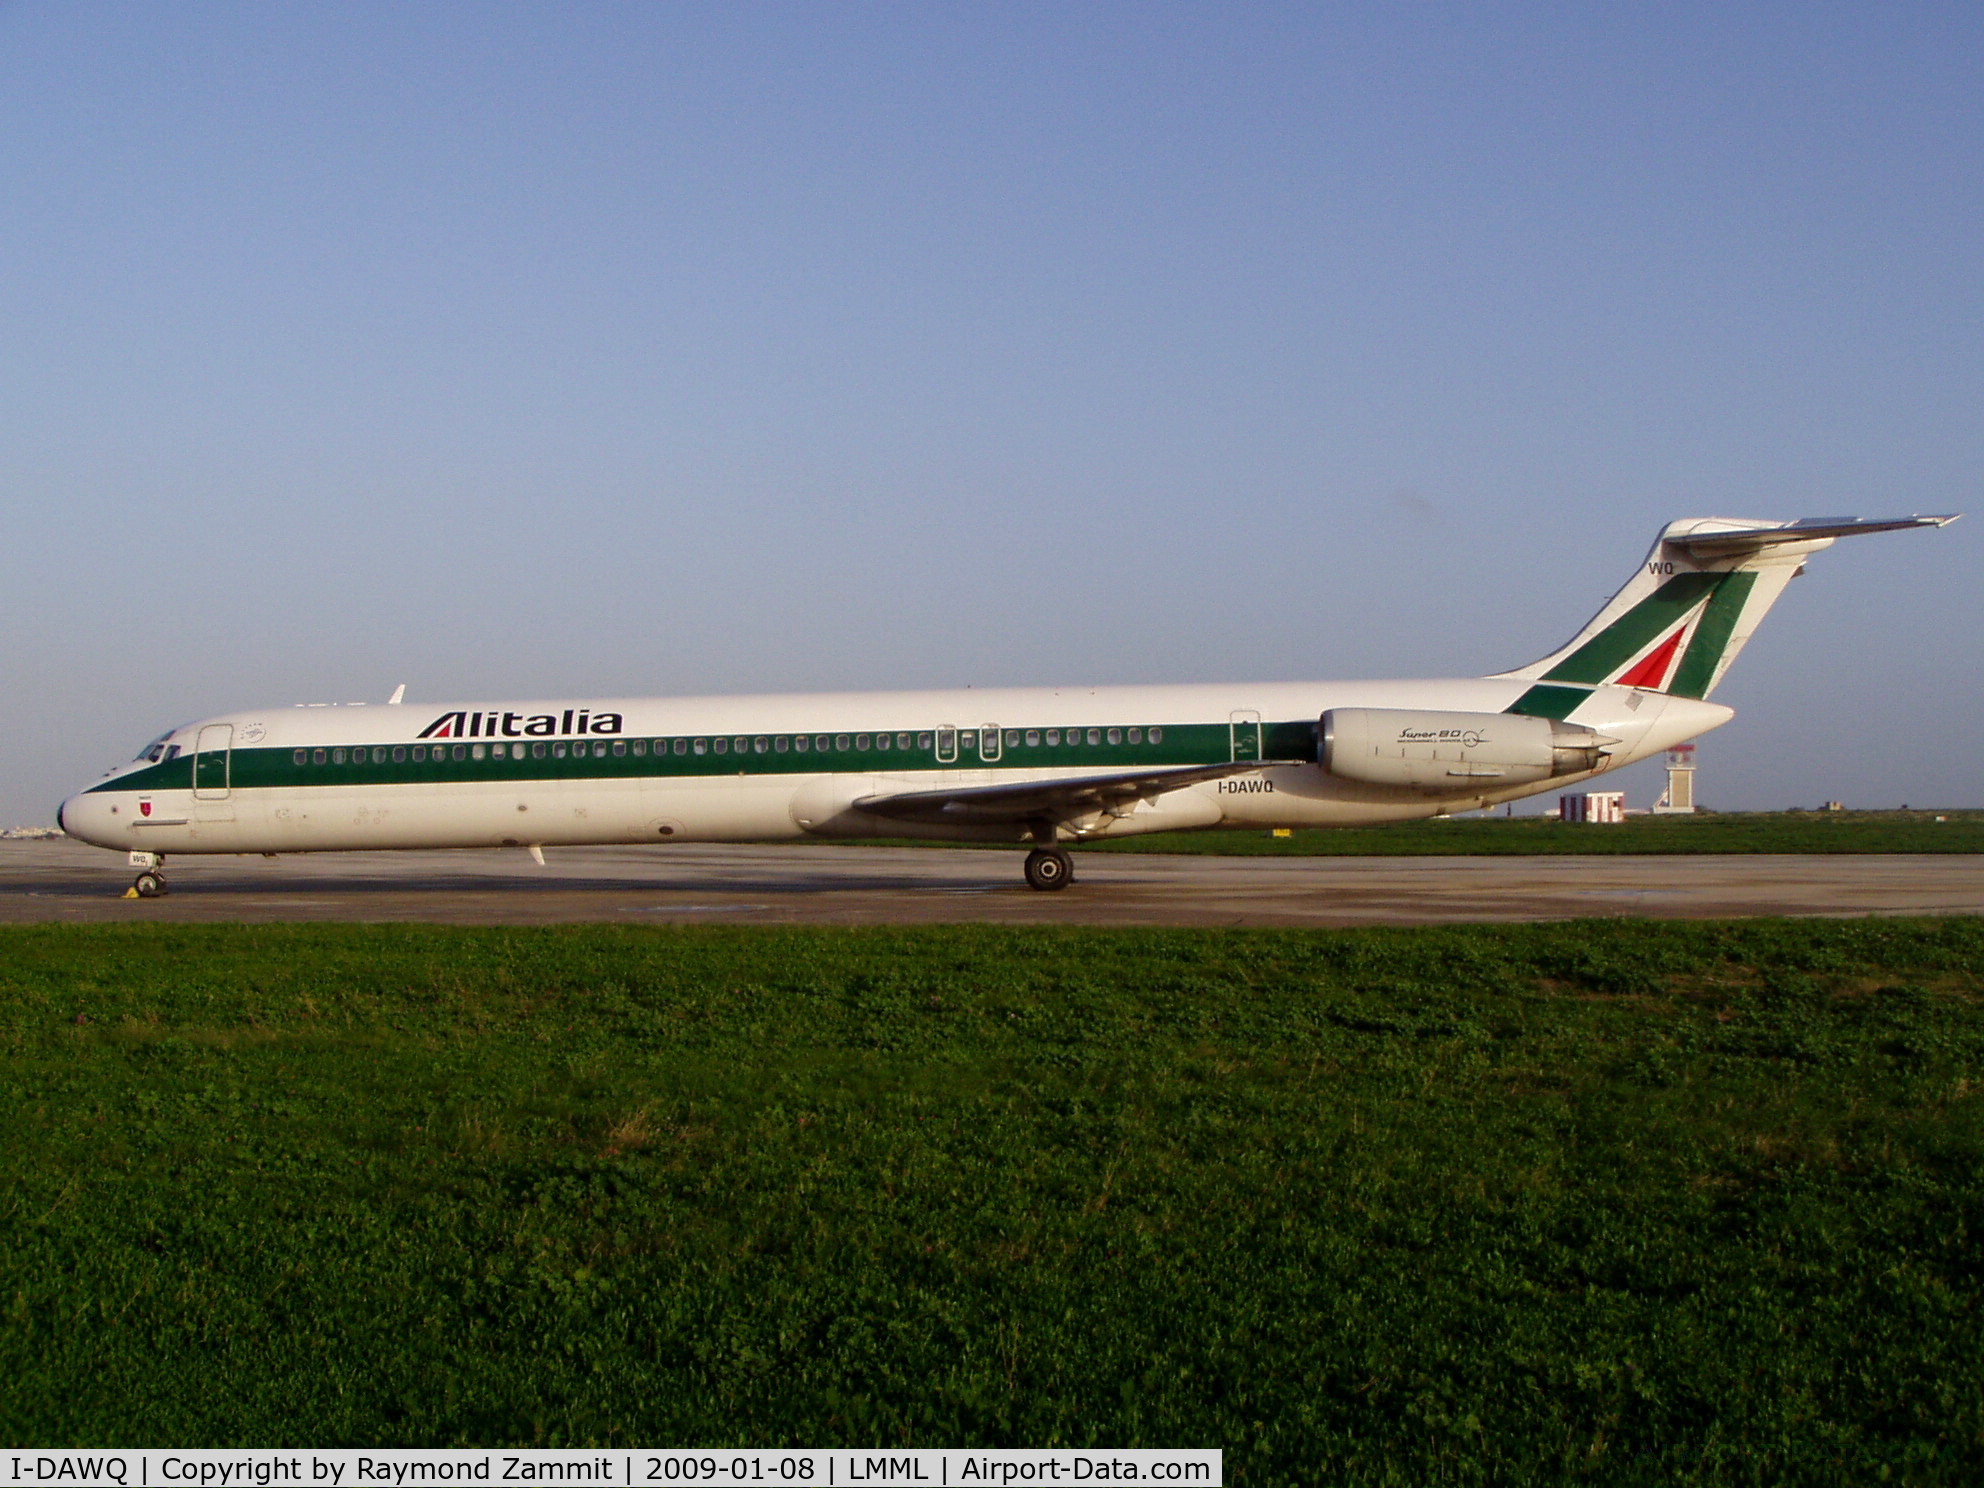 I-DAWQ, 1985 McDonnell Douglas MD-82 (DC-9-82) C/N 49207, MD-82 I-DAWQ Alitalia